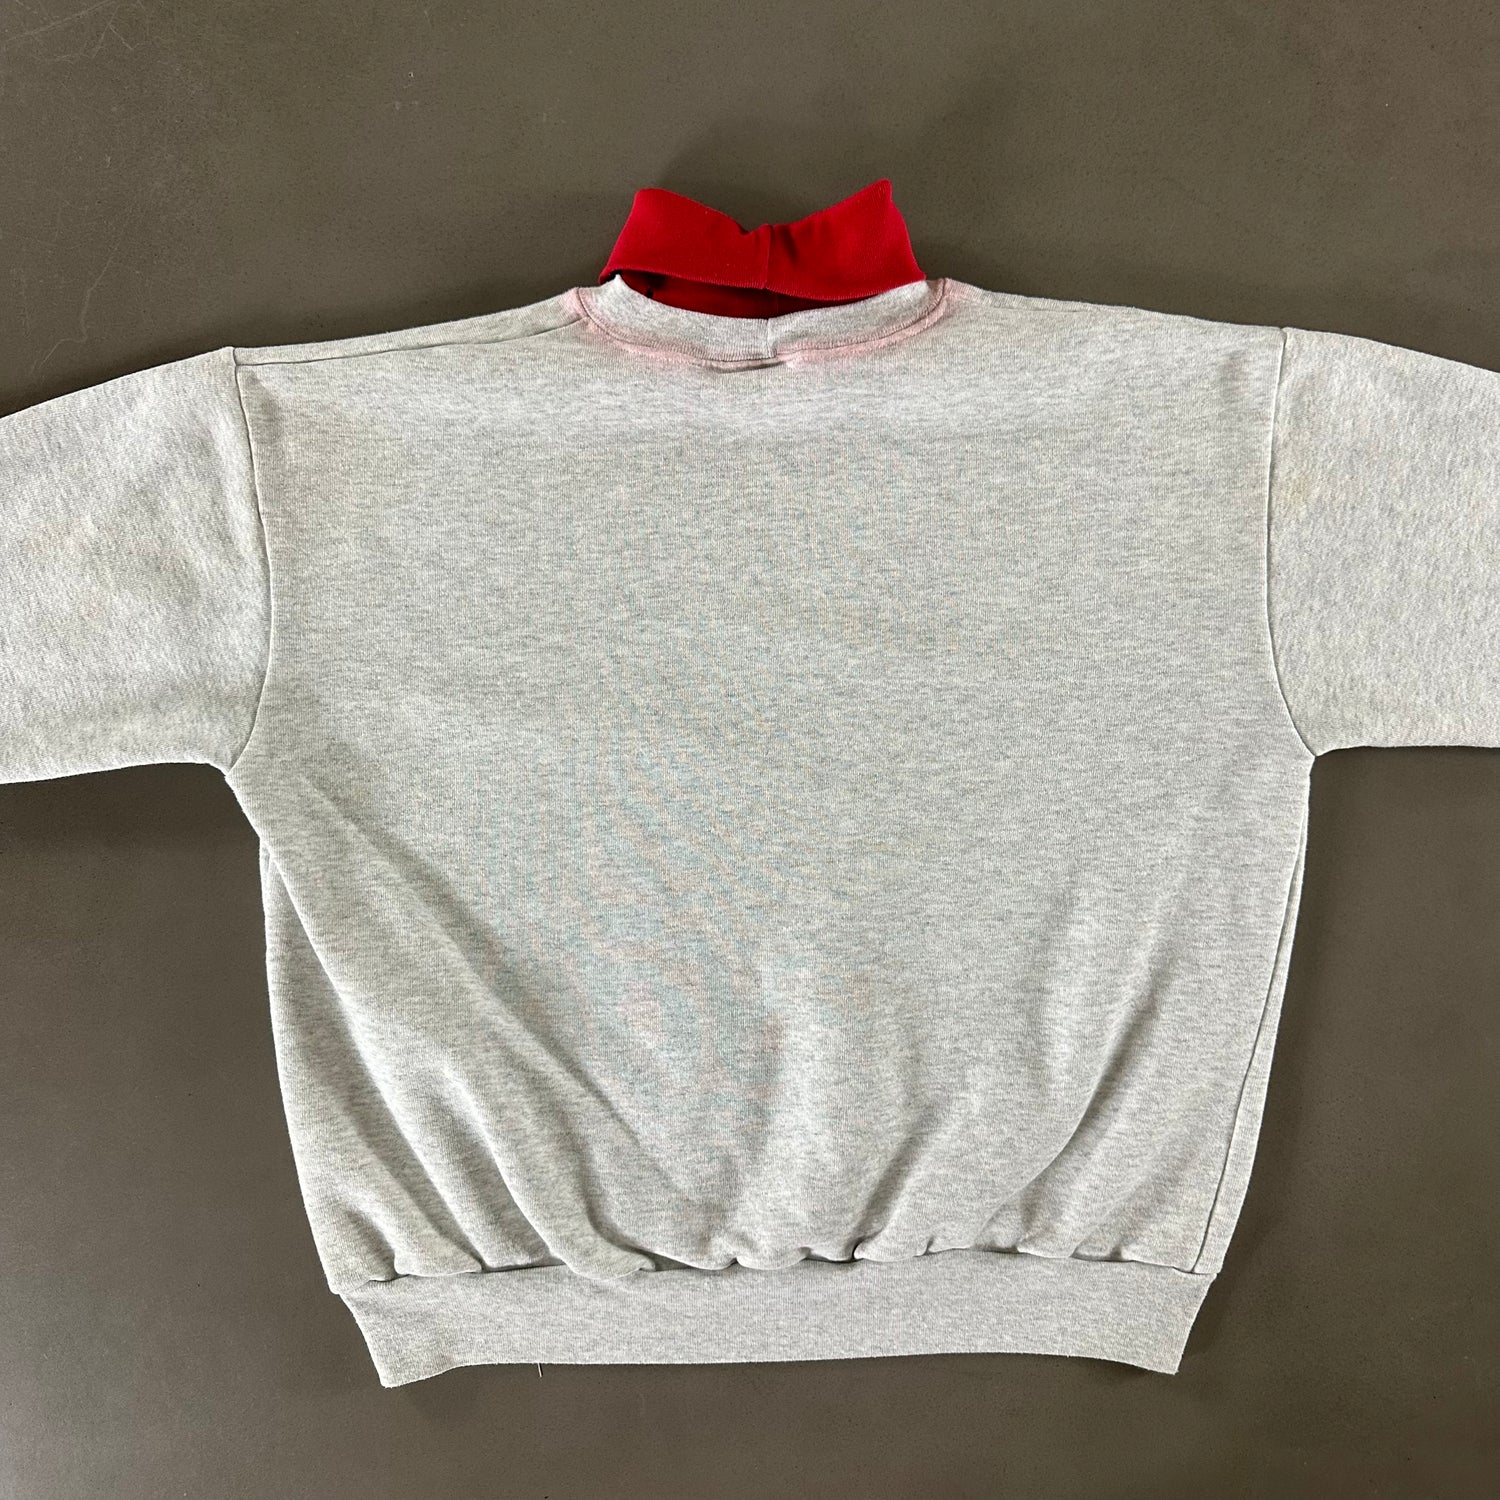 Vintage 1990s New Jersey Devils Sweatshirt size XL